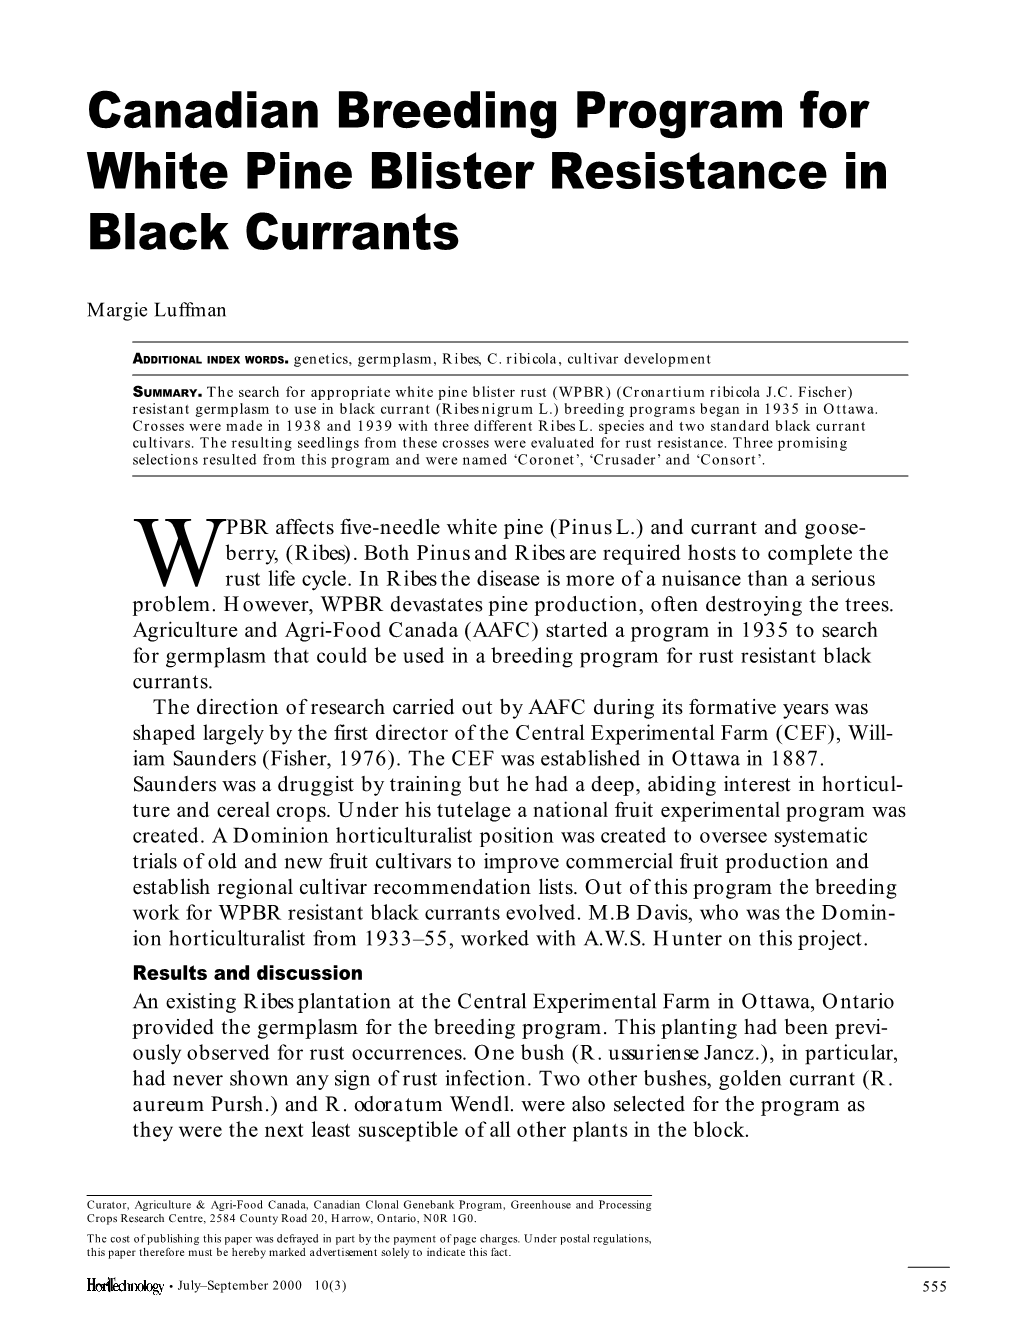 Canadian Breeding Program for White Pine Blister Resistance in Black Currants